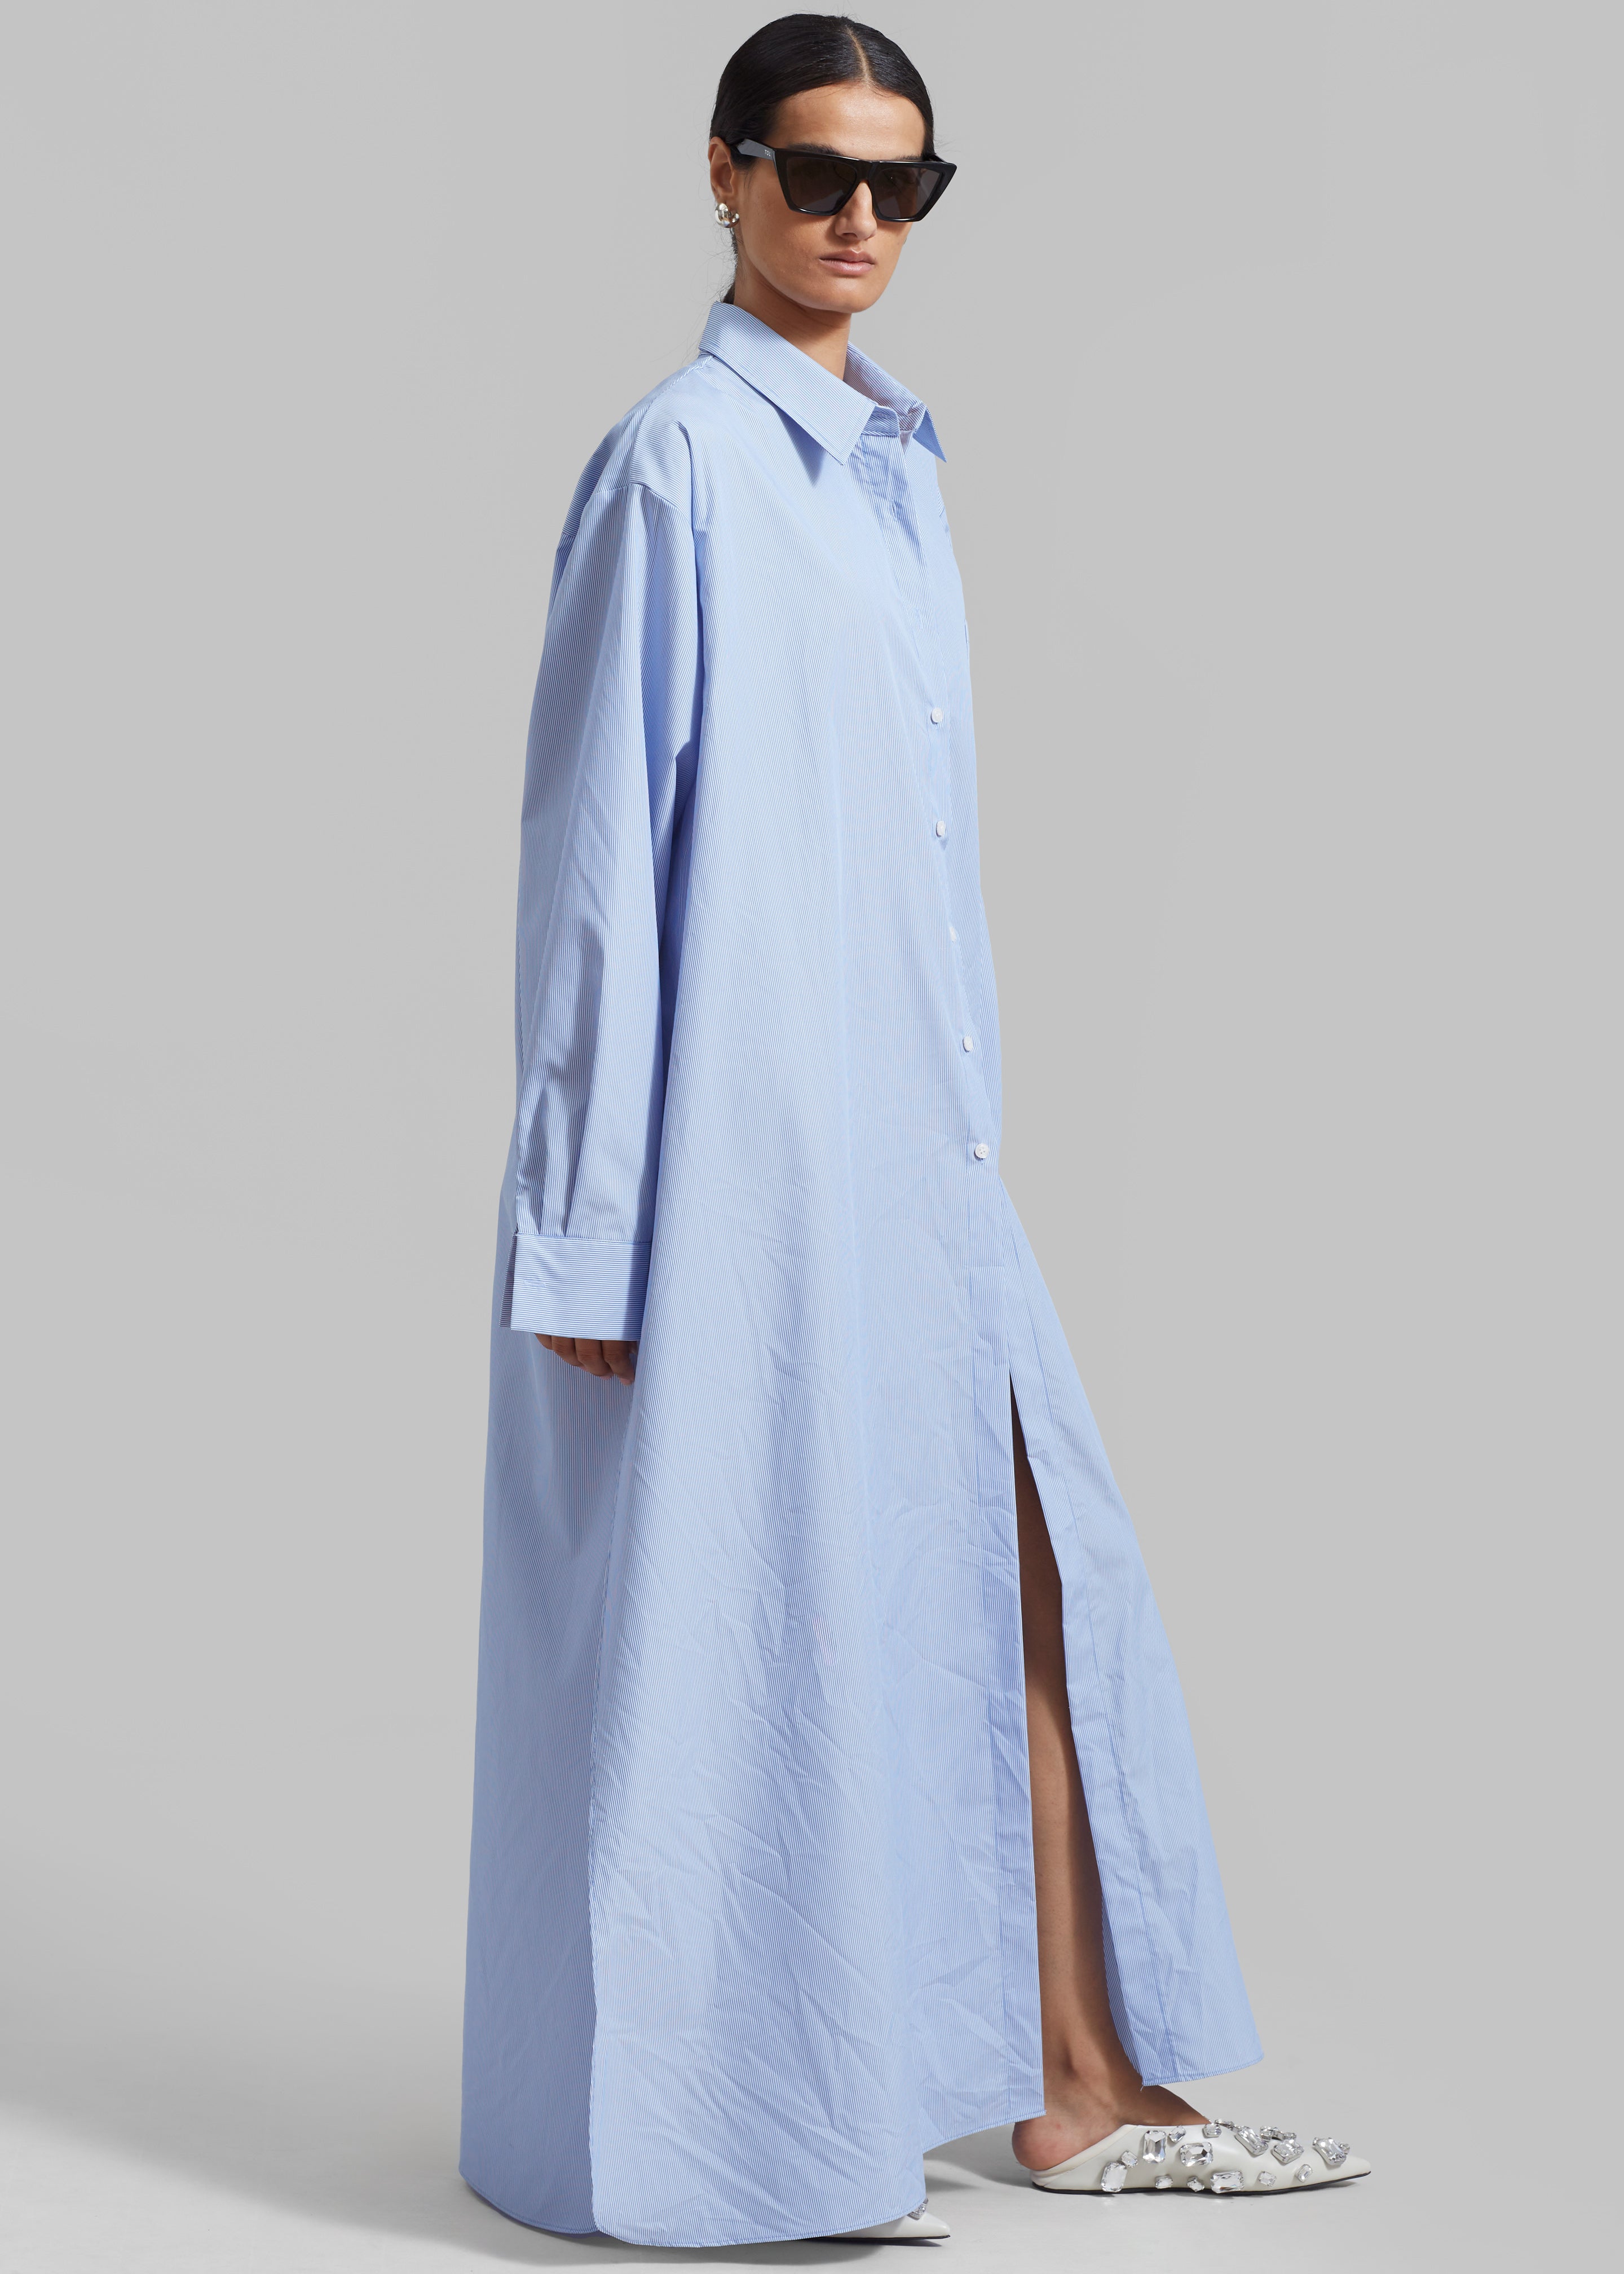 Avery Shirt Dress - Blue Stripe - 6